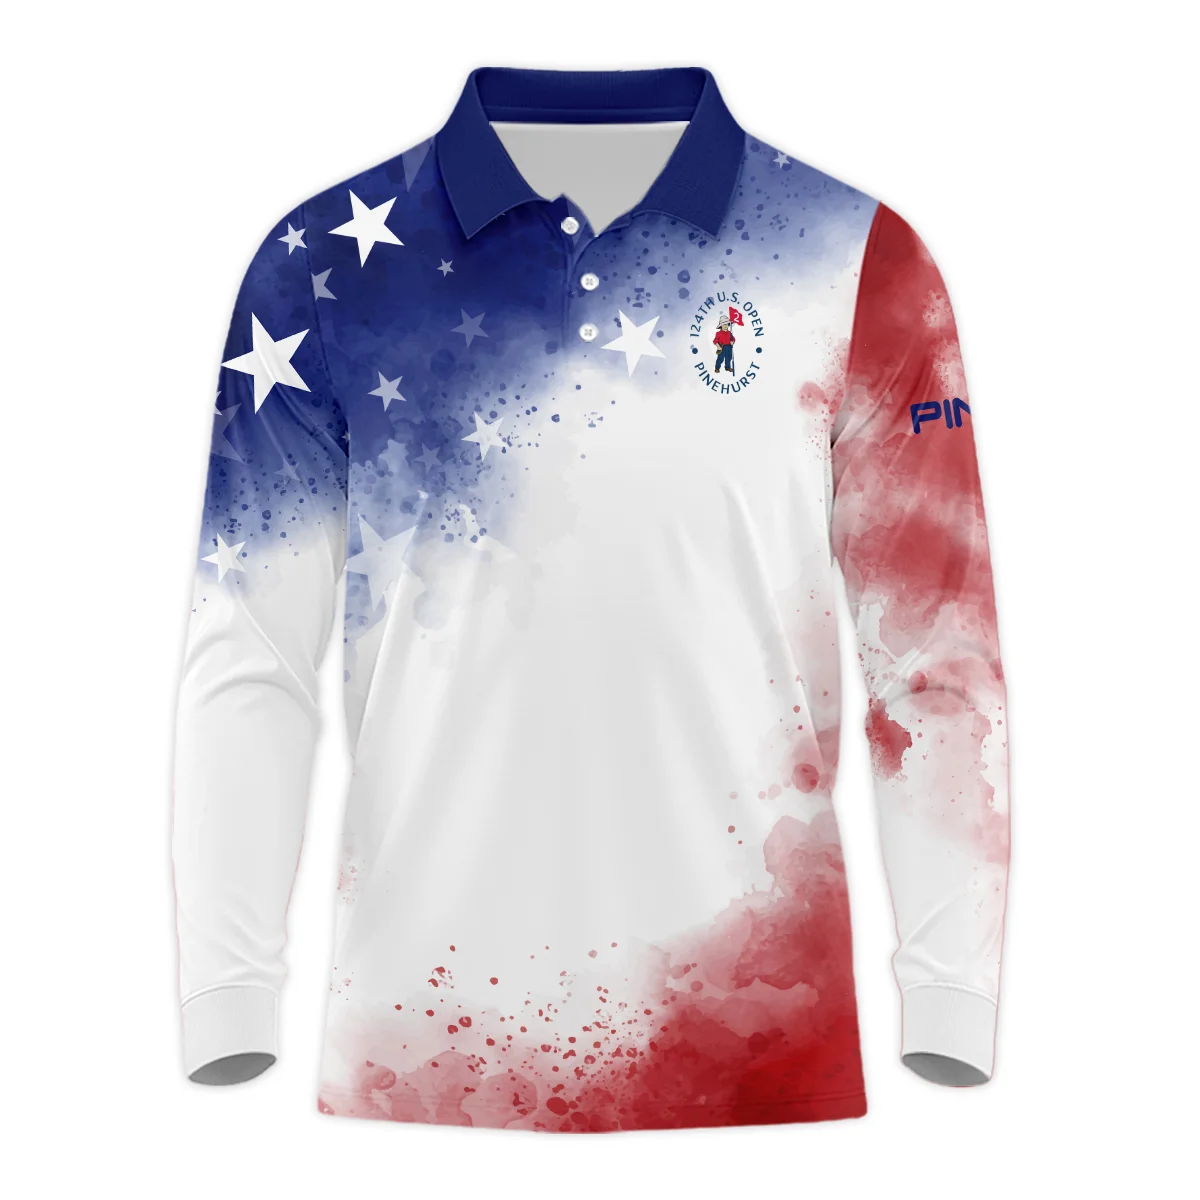 124th U.S. Open Pinehurst Ping Blue Red Watercolor Star White Backgound Hoodie Shirt Style Classic Hoodie Shirt